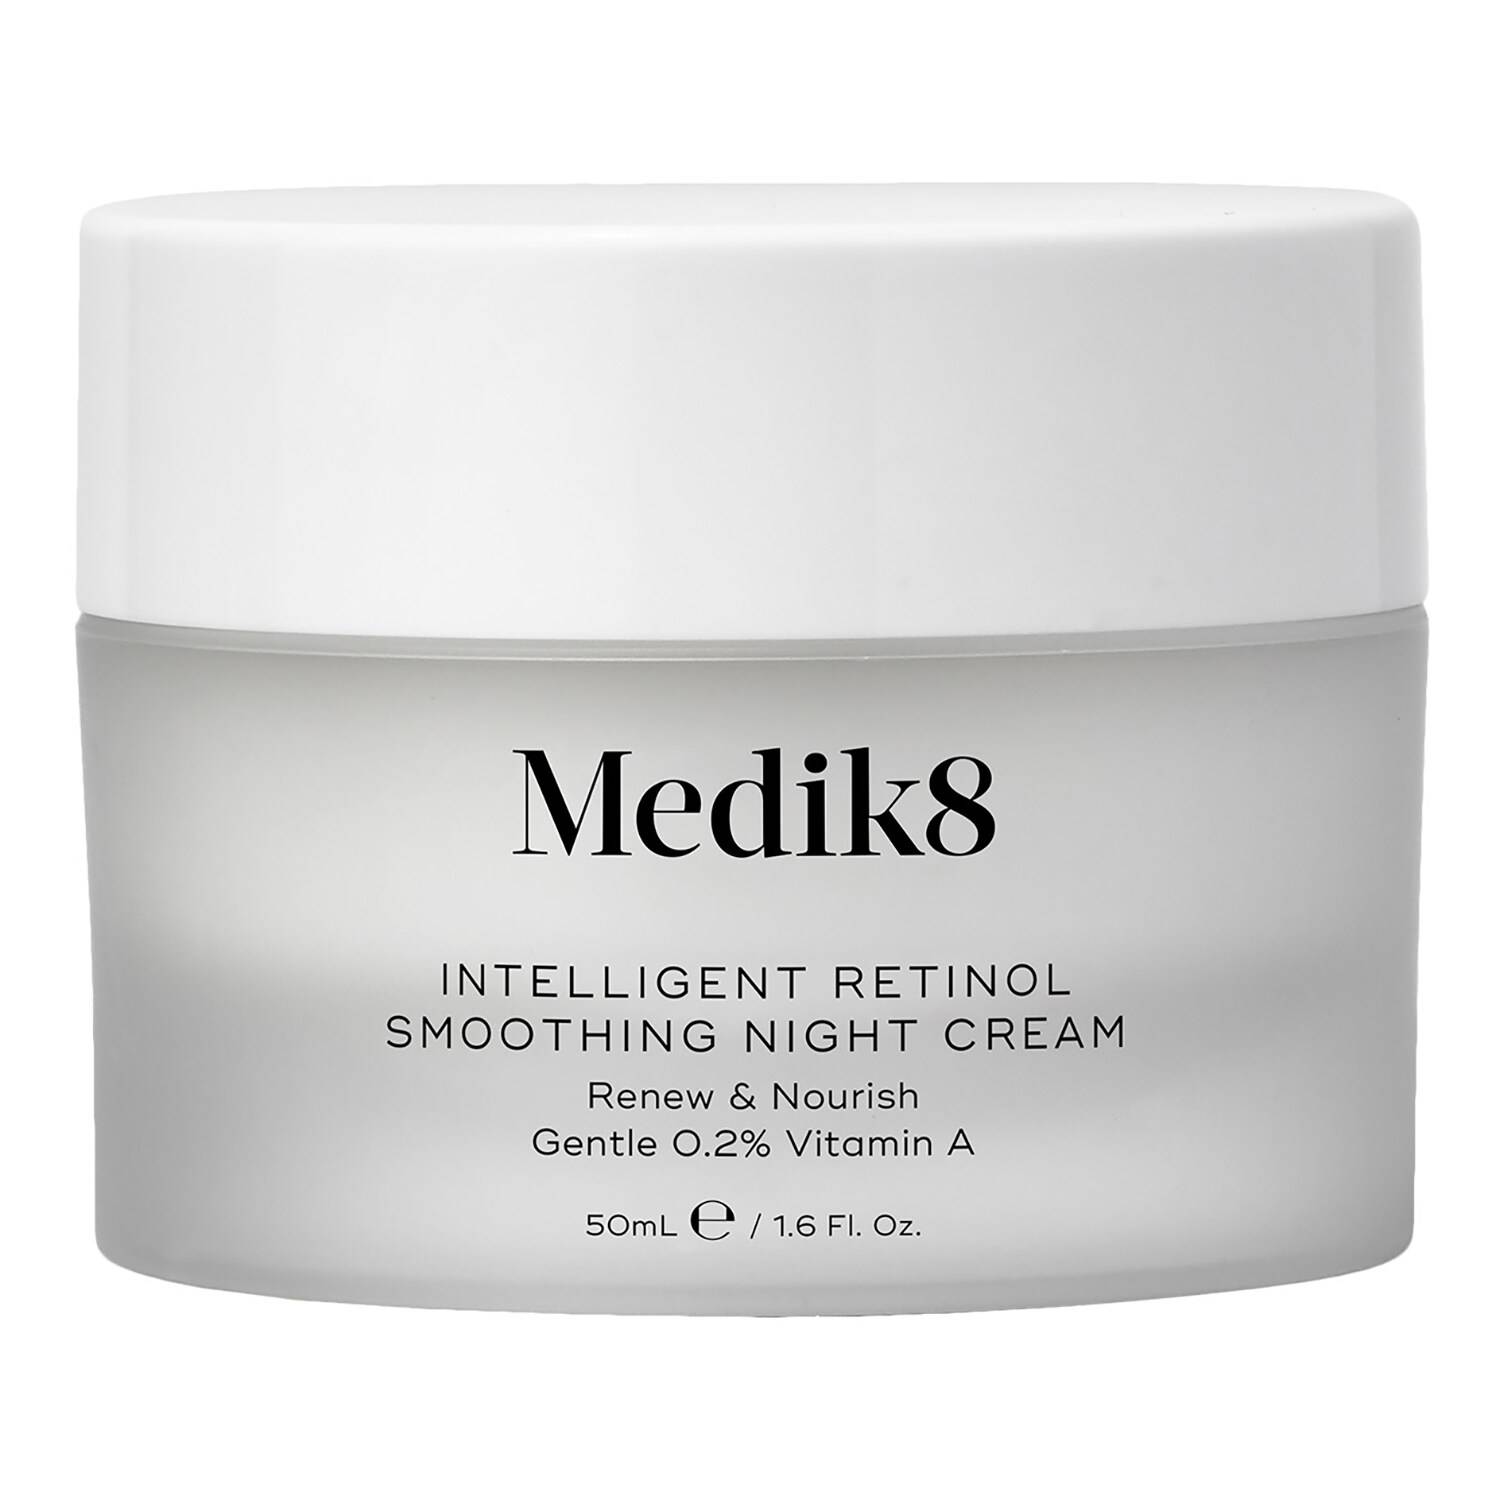 MEDIK8 Intelligent Retinol Smoothing Night Cream 50ml